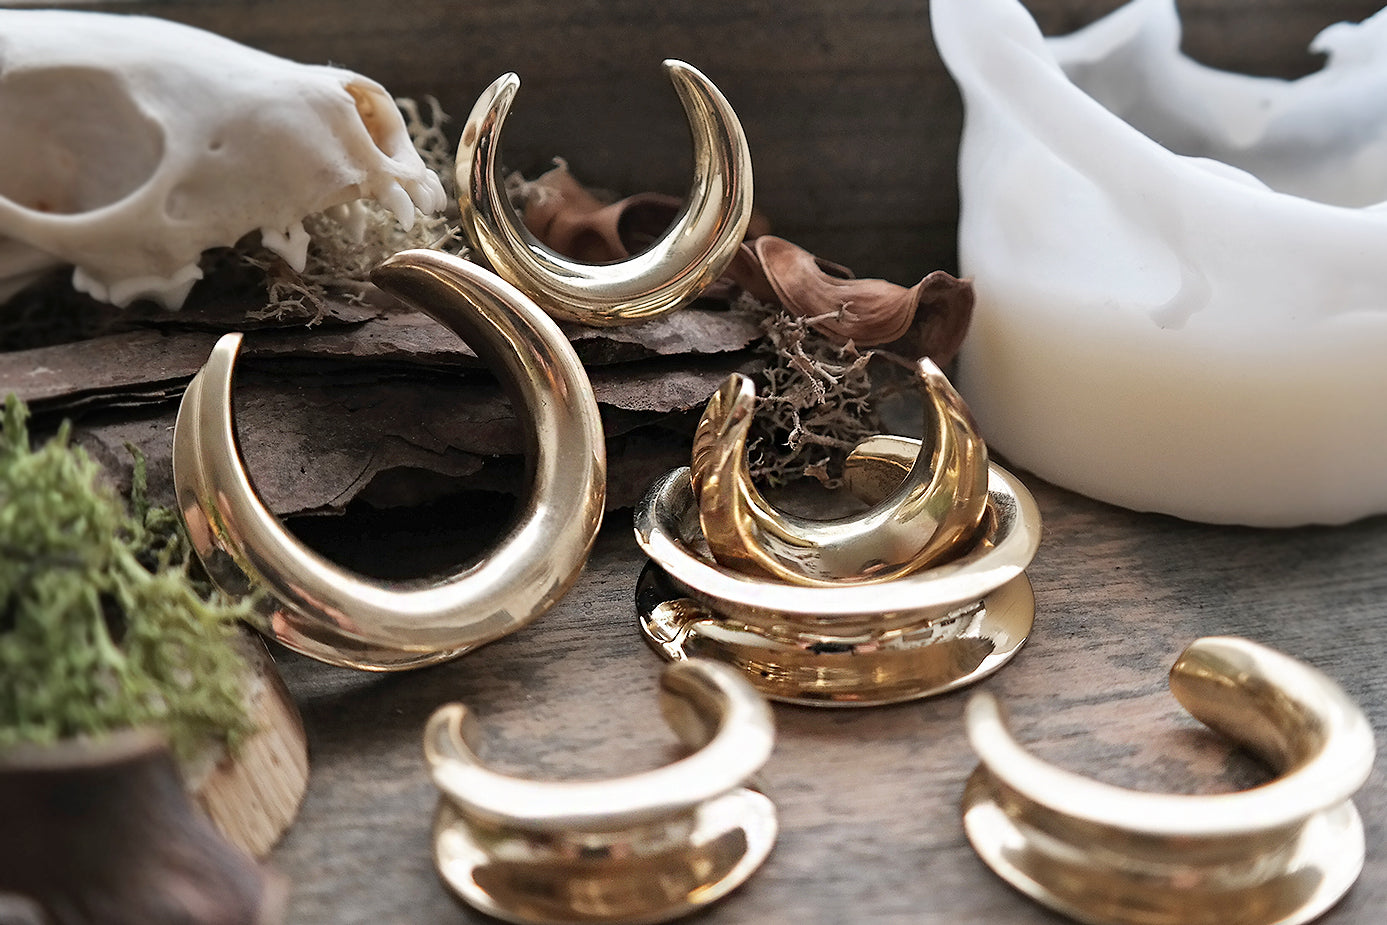 Golden Brass Saddle Spreaders #SW01 - Fux Jewellery